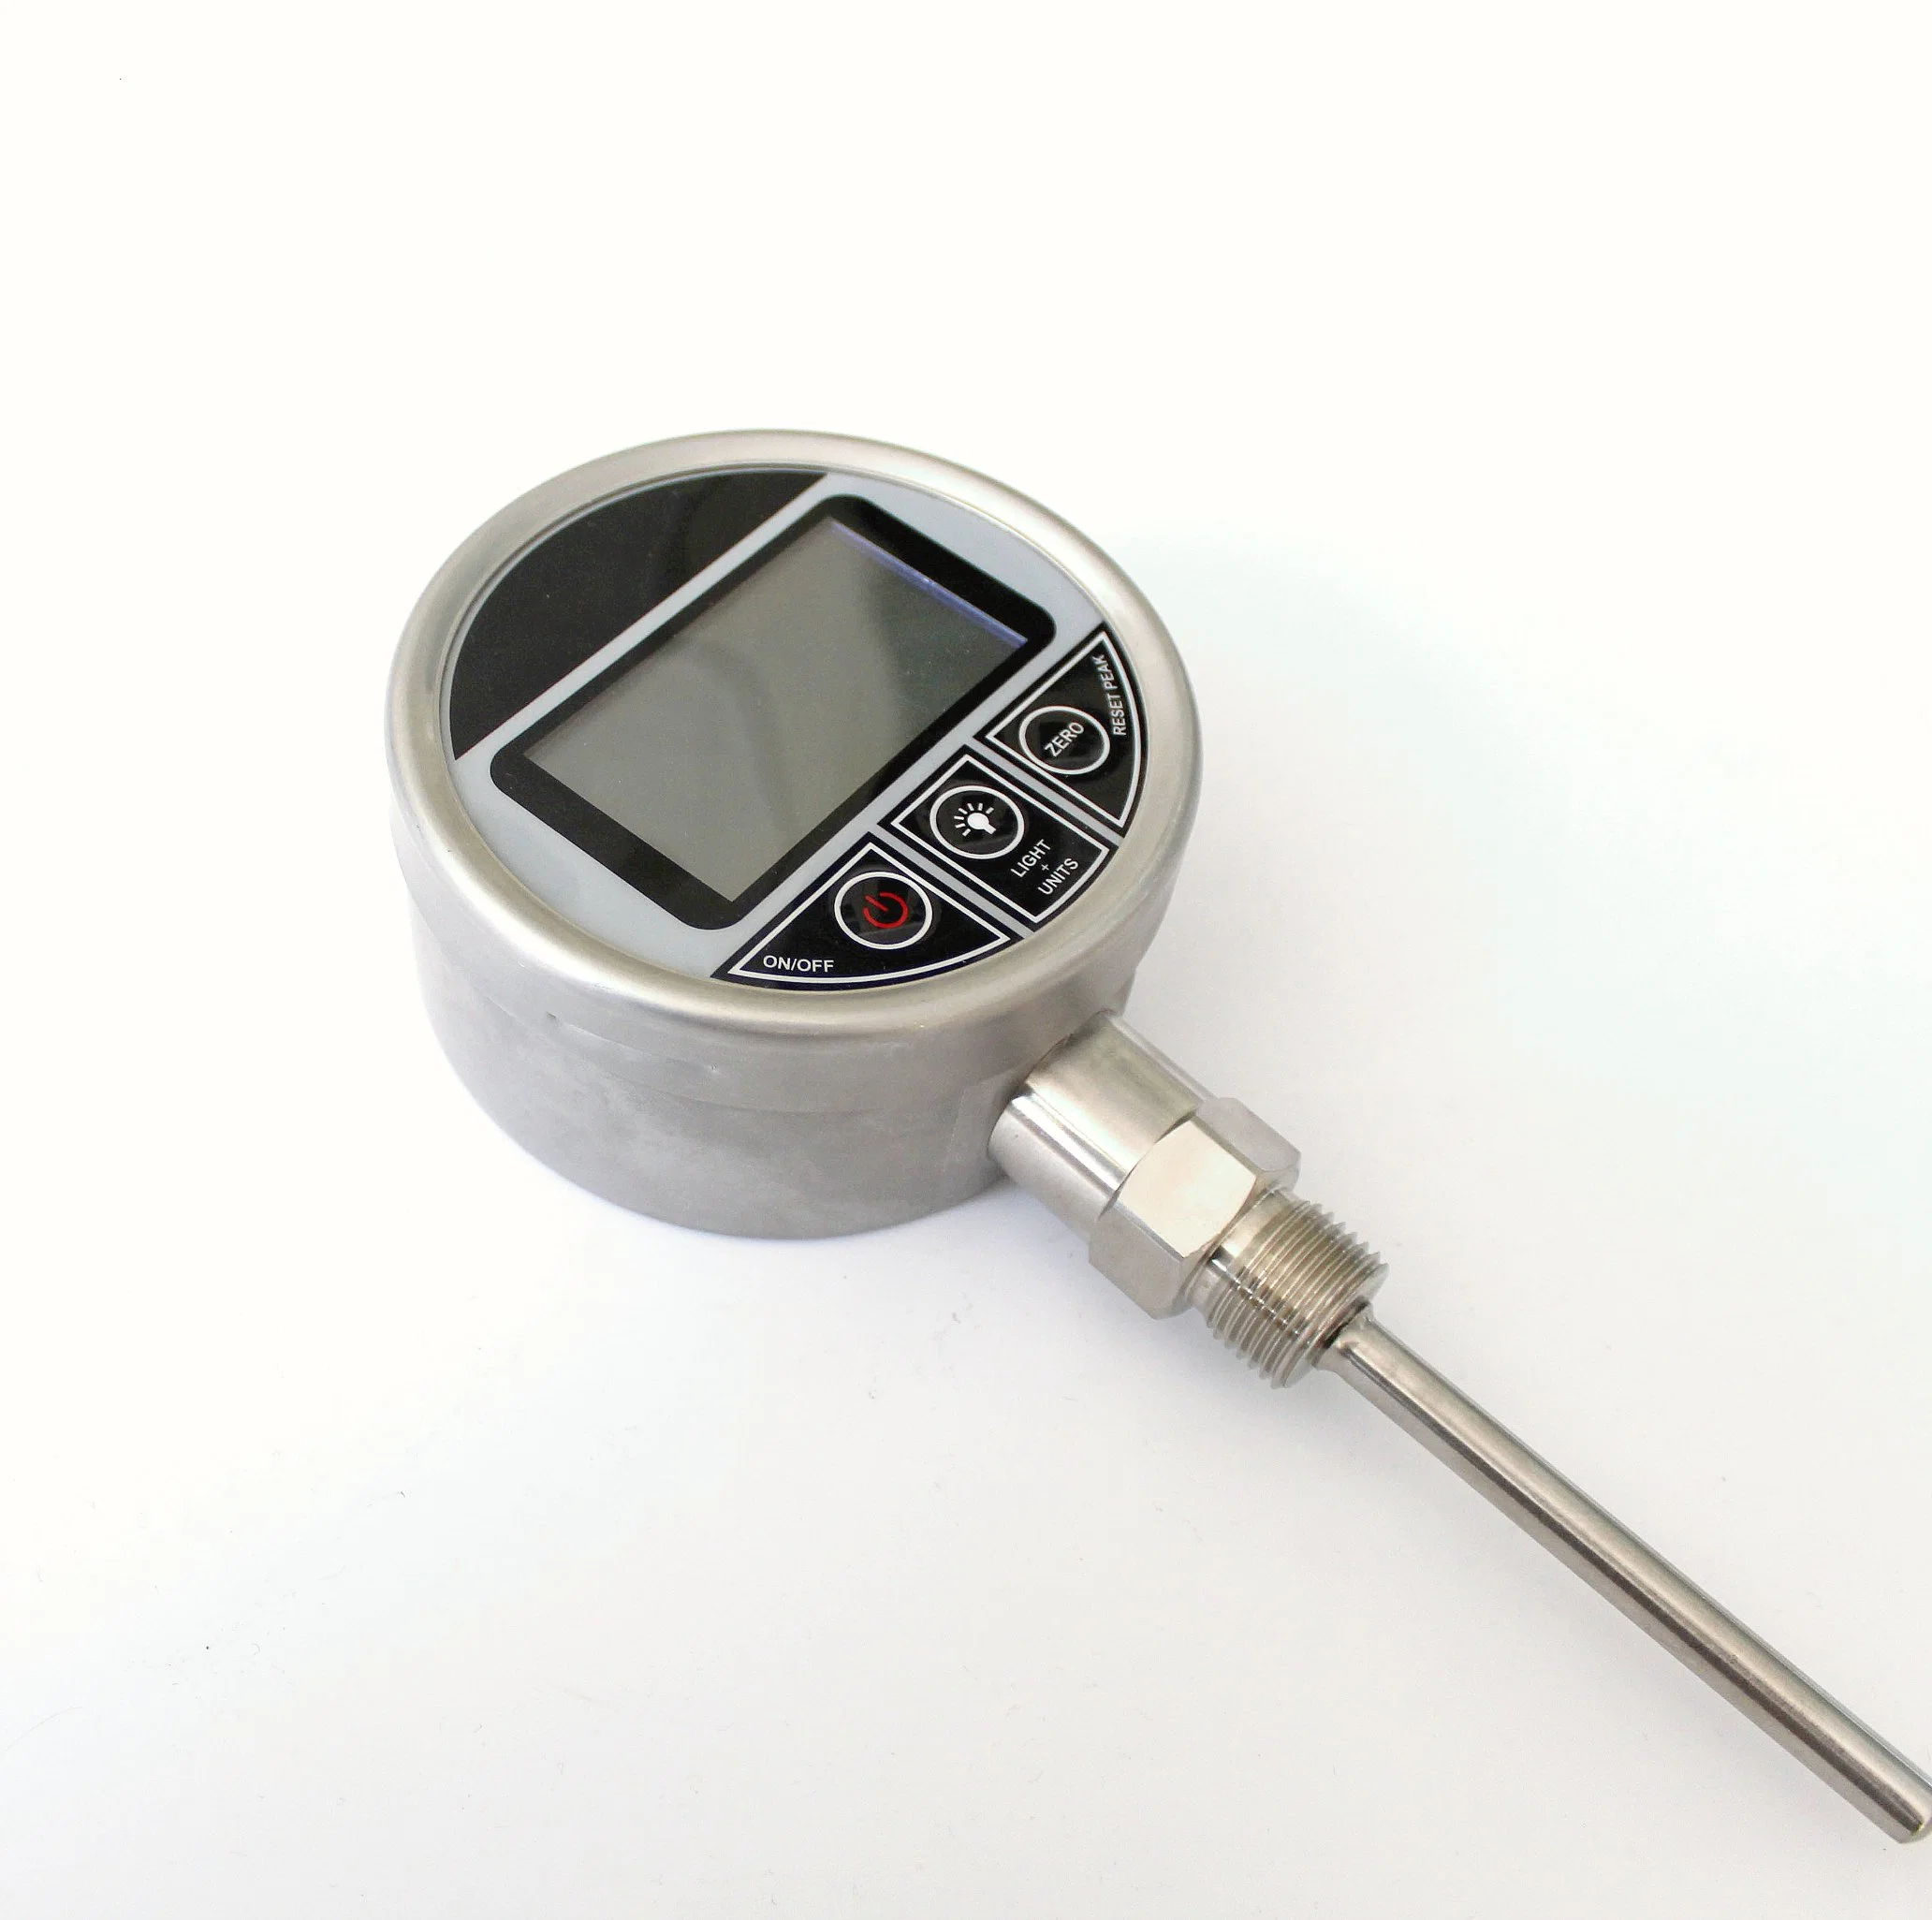 Аккумуляторная батарея - мощная горячая вода с термомасляным цифровым температурным индикатором